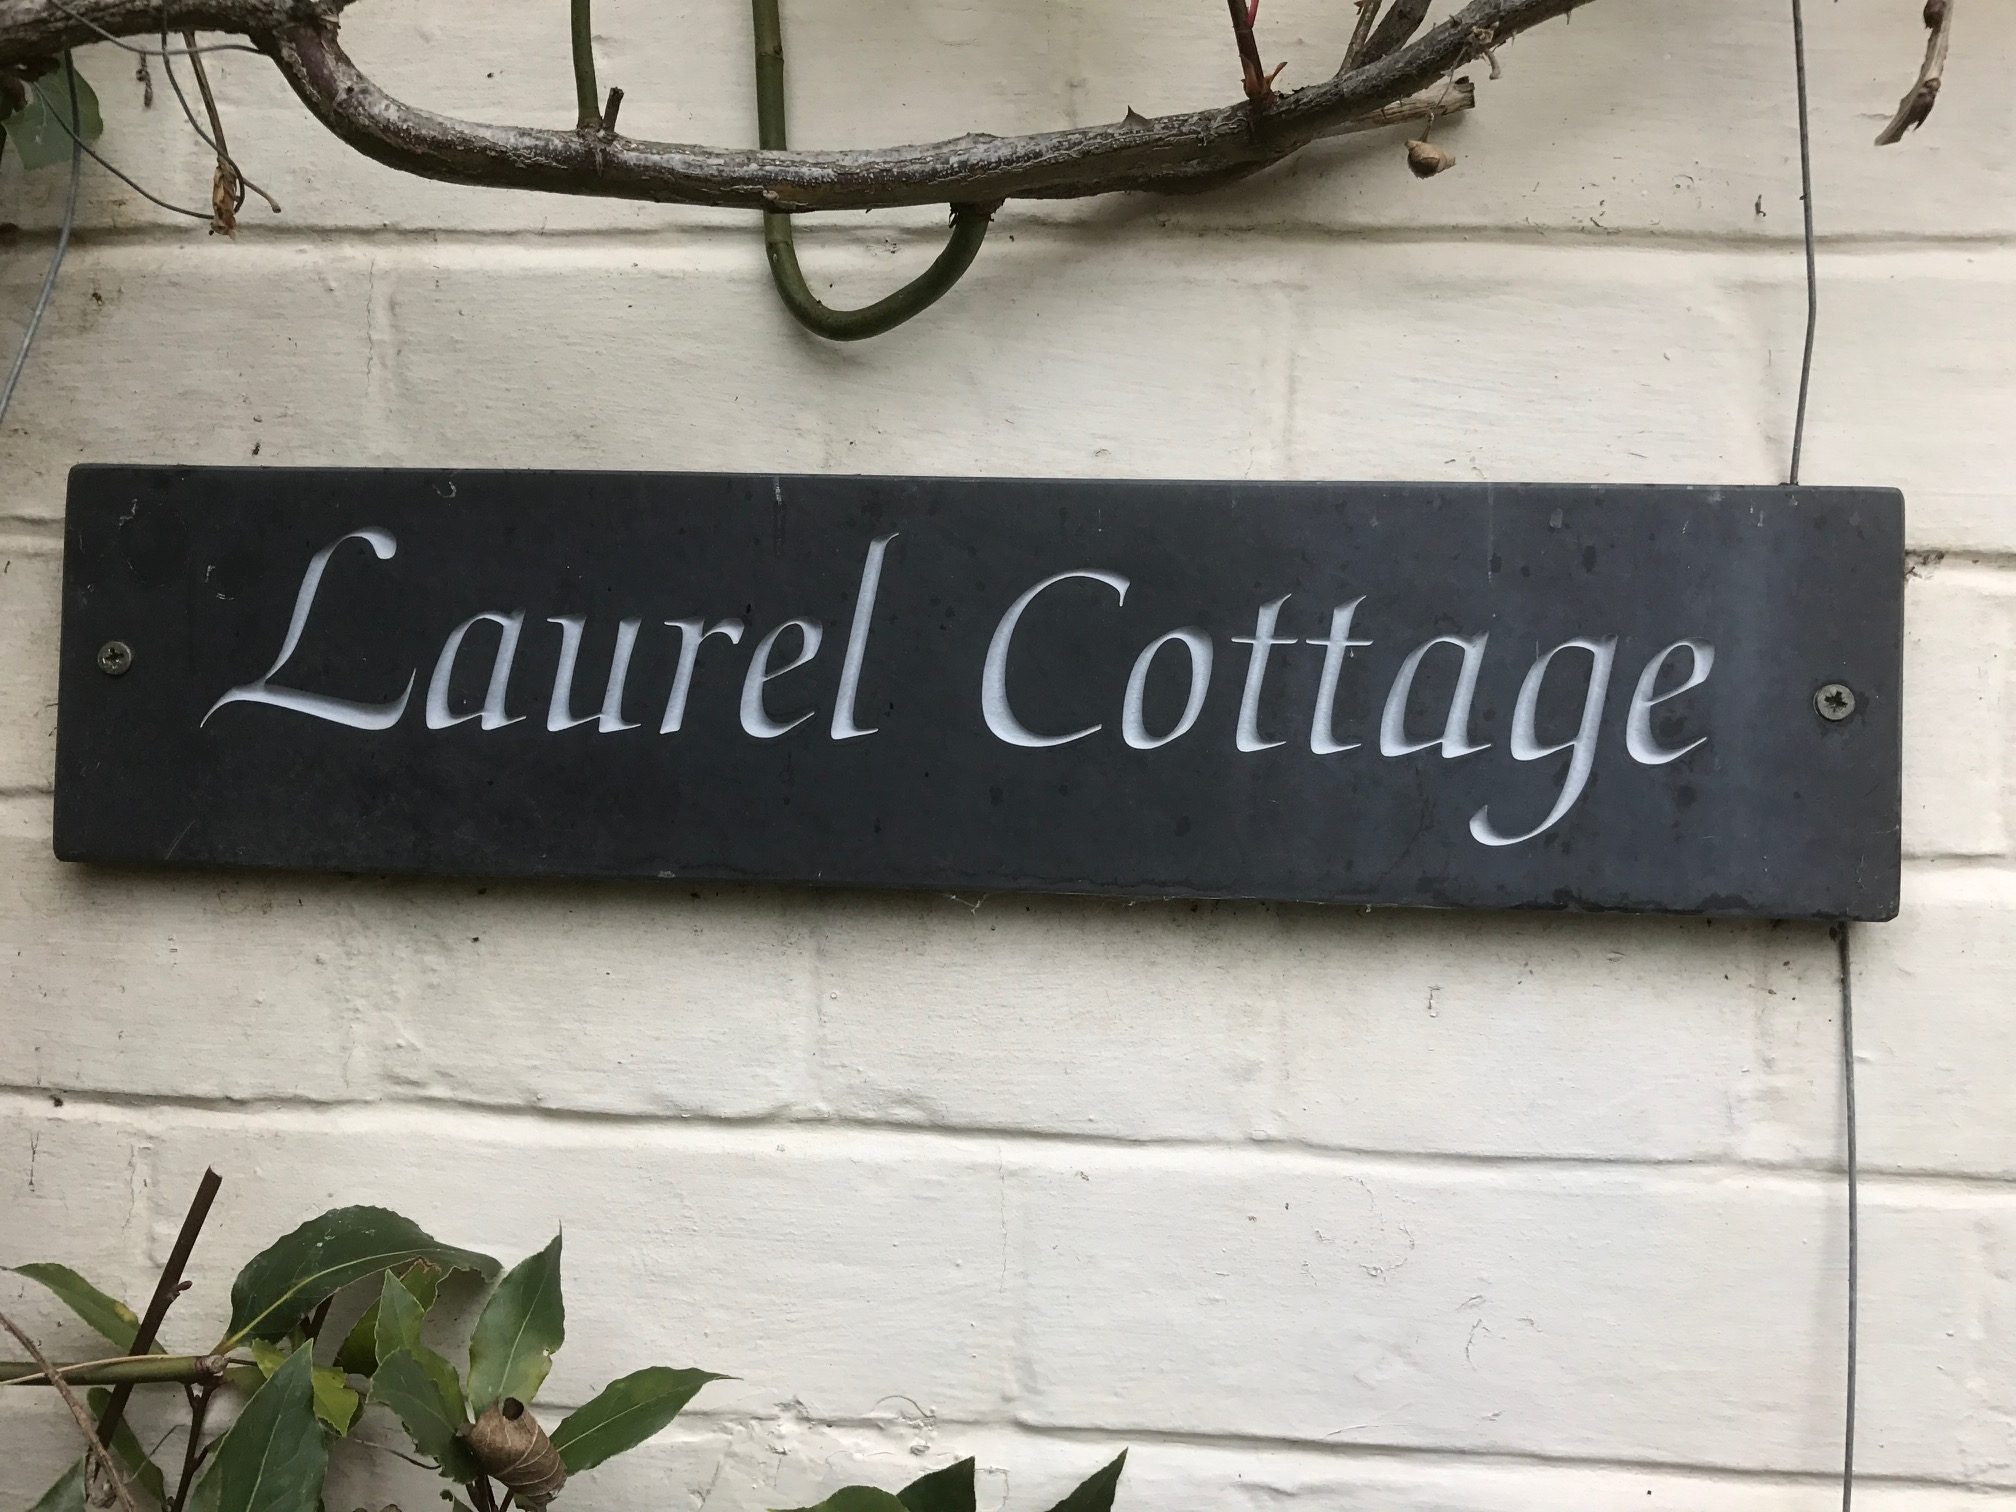 Laurel Cottage: Made in Wales of Welsh slate.